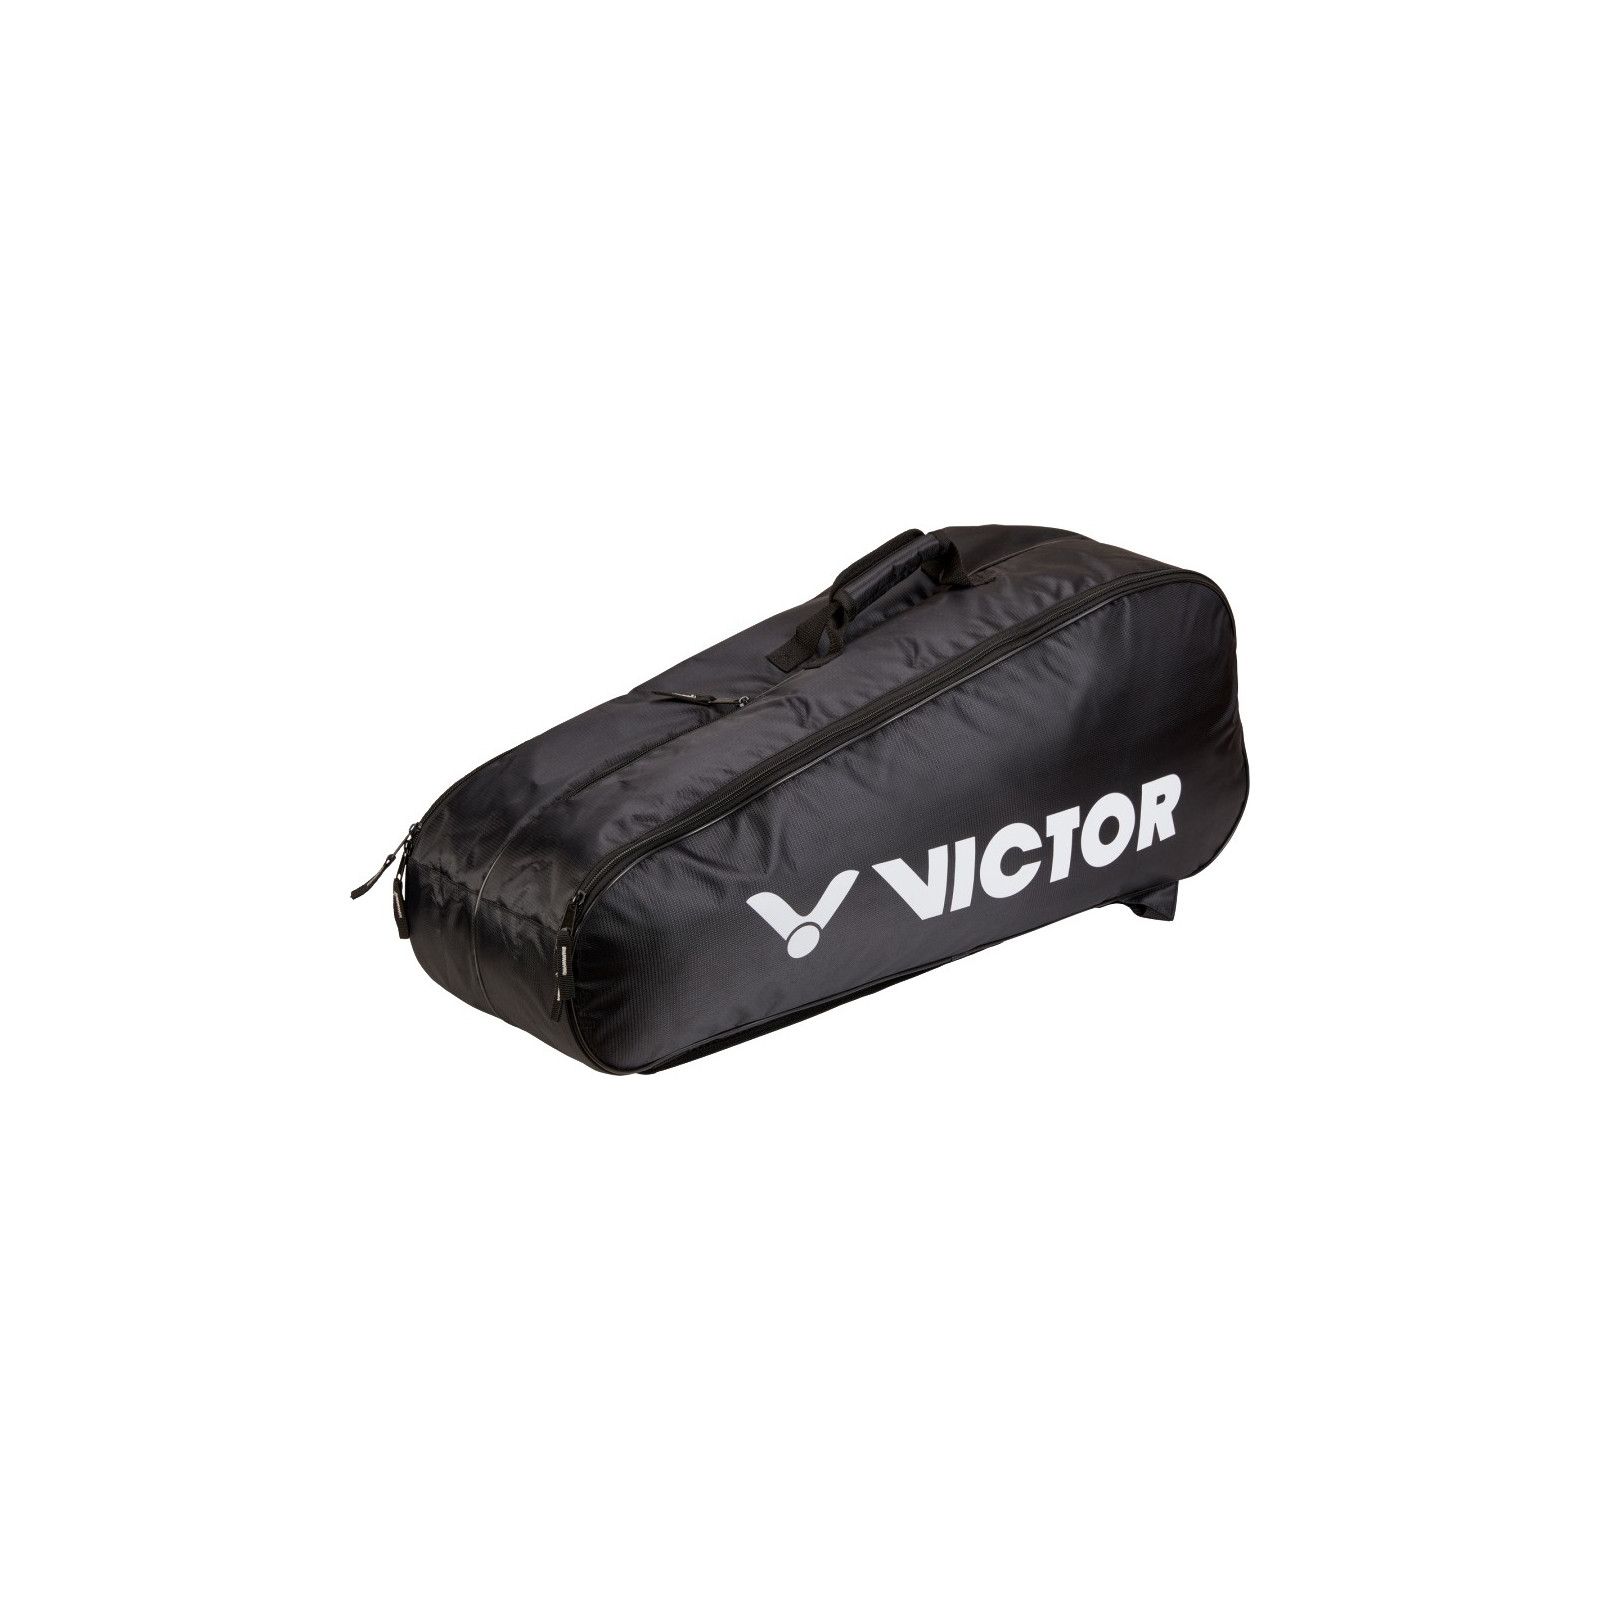 Victor Doublethermobag 9150 C Black